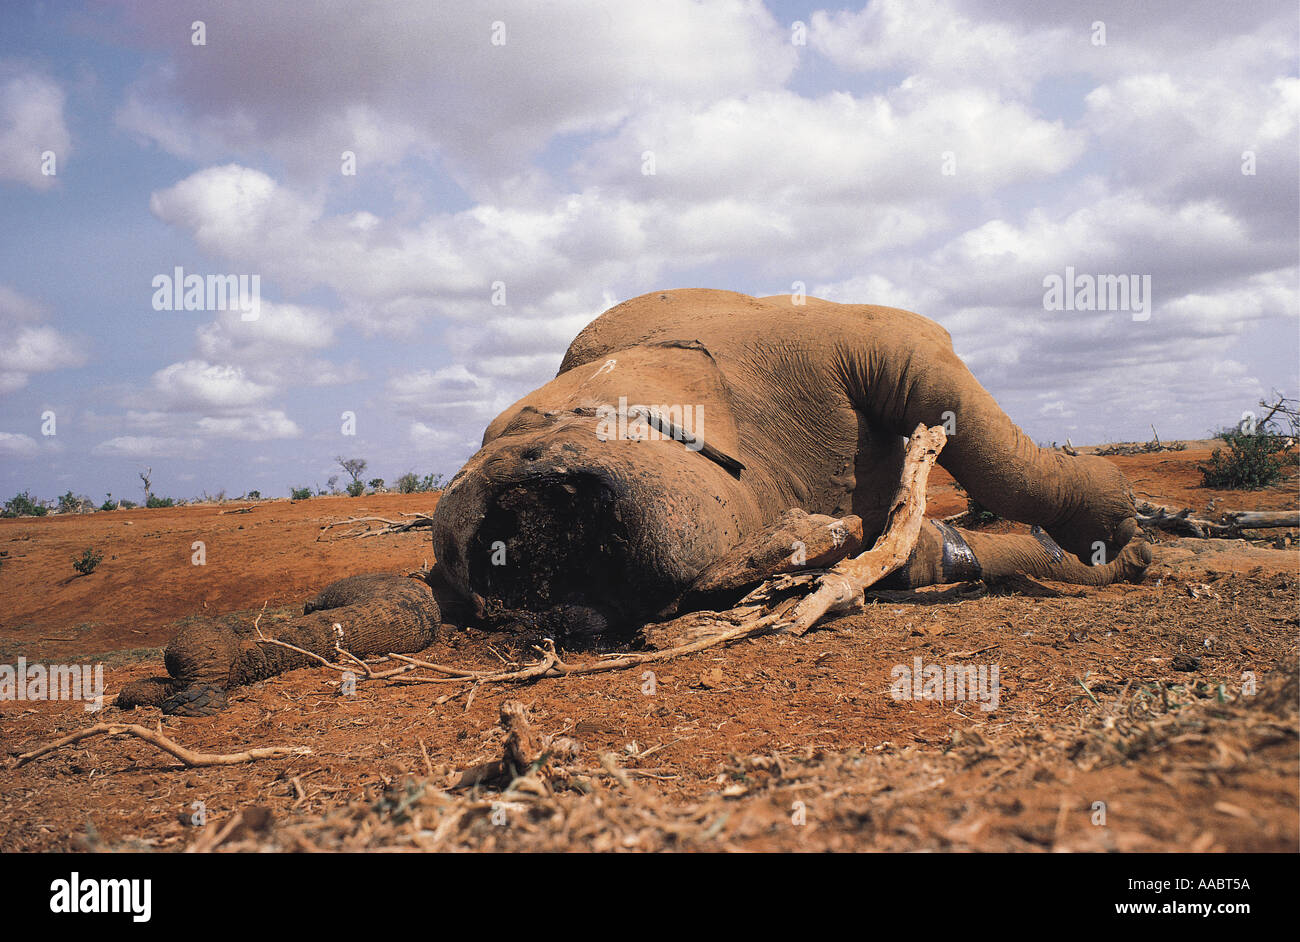 Dead elephant killed by poachers Stock Photo